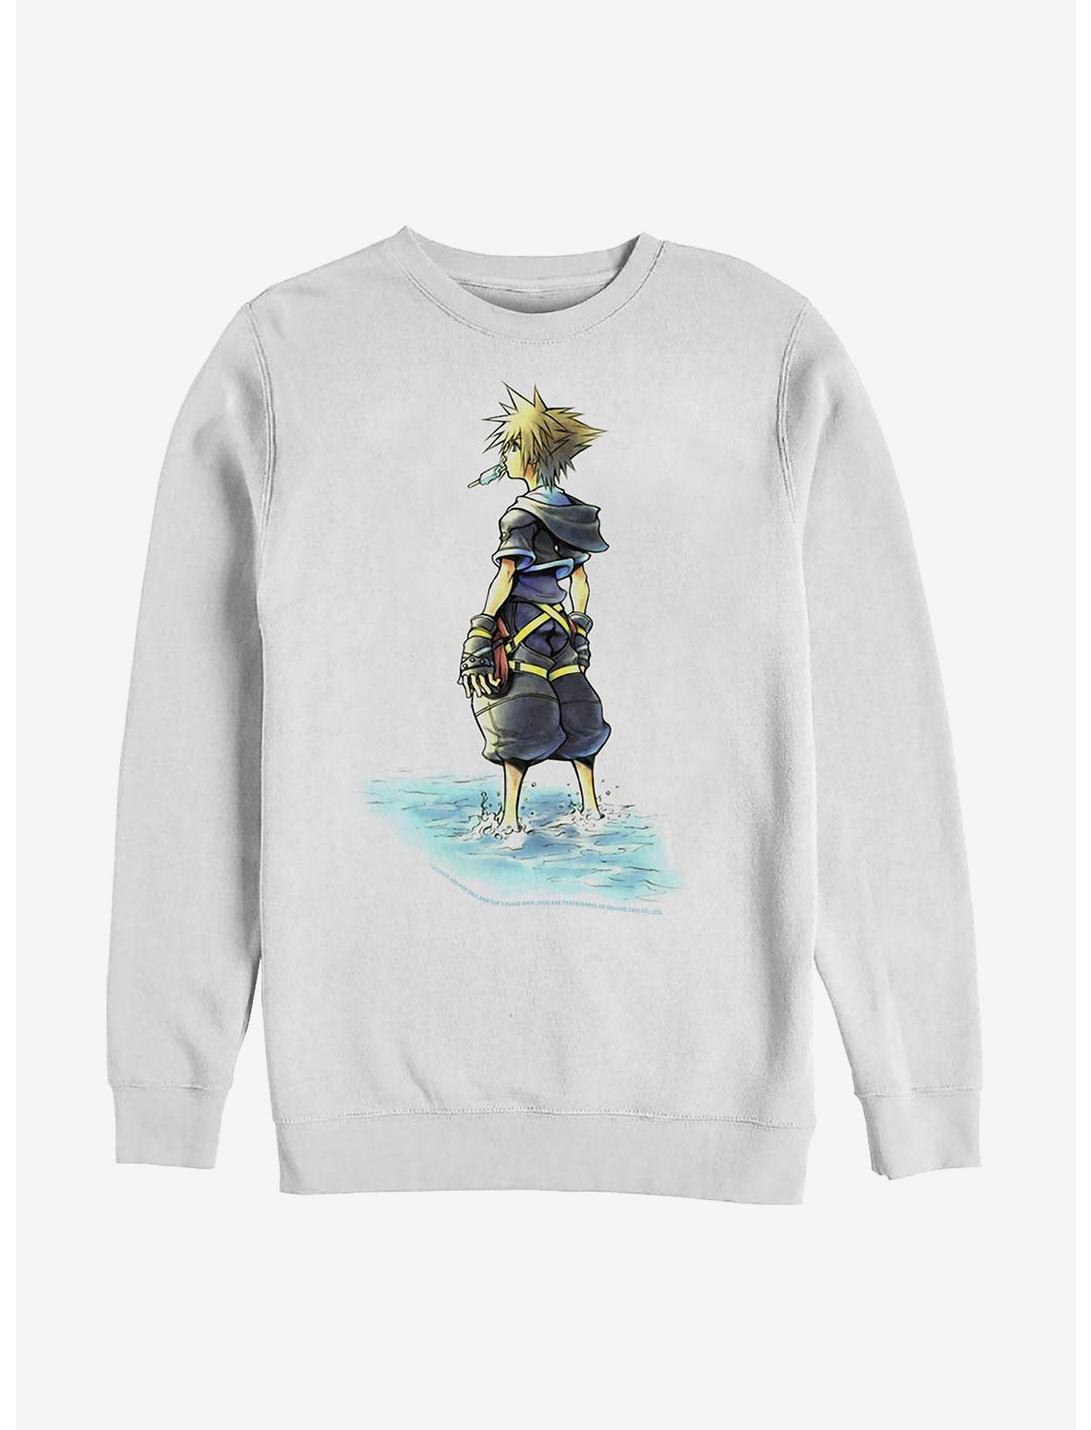 Disney Kingdom Hearts Feet Wet Sweatshirt, WHITE, hi-res